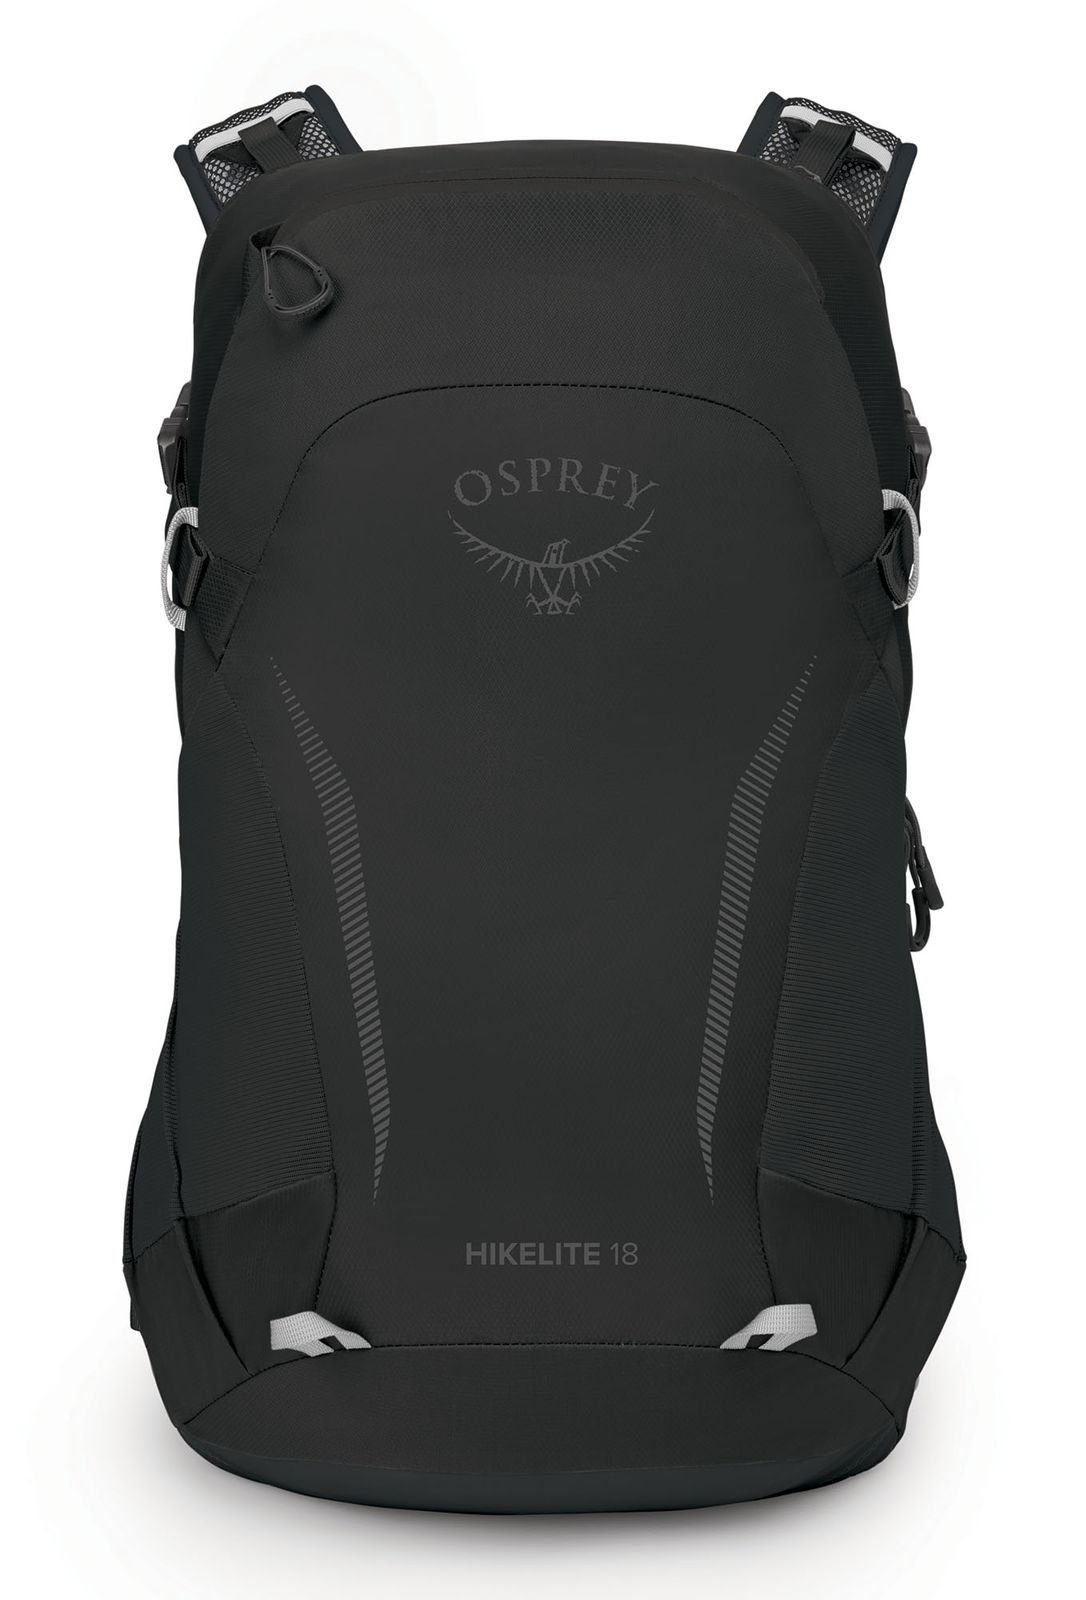 Osprey Rucksack (Set) 1 Black